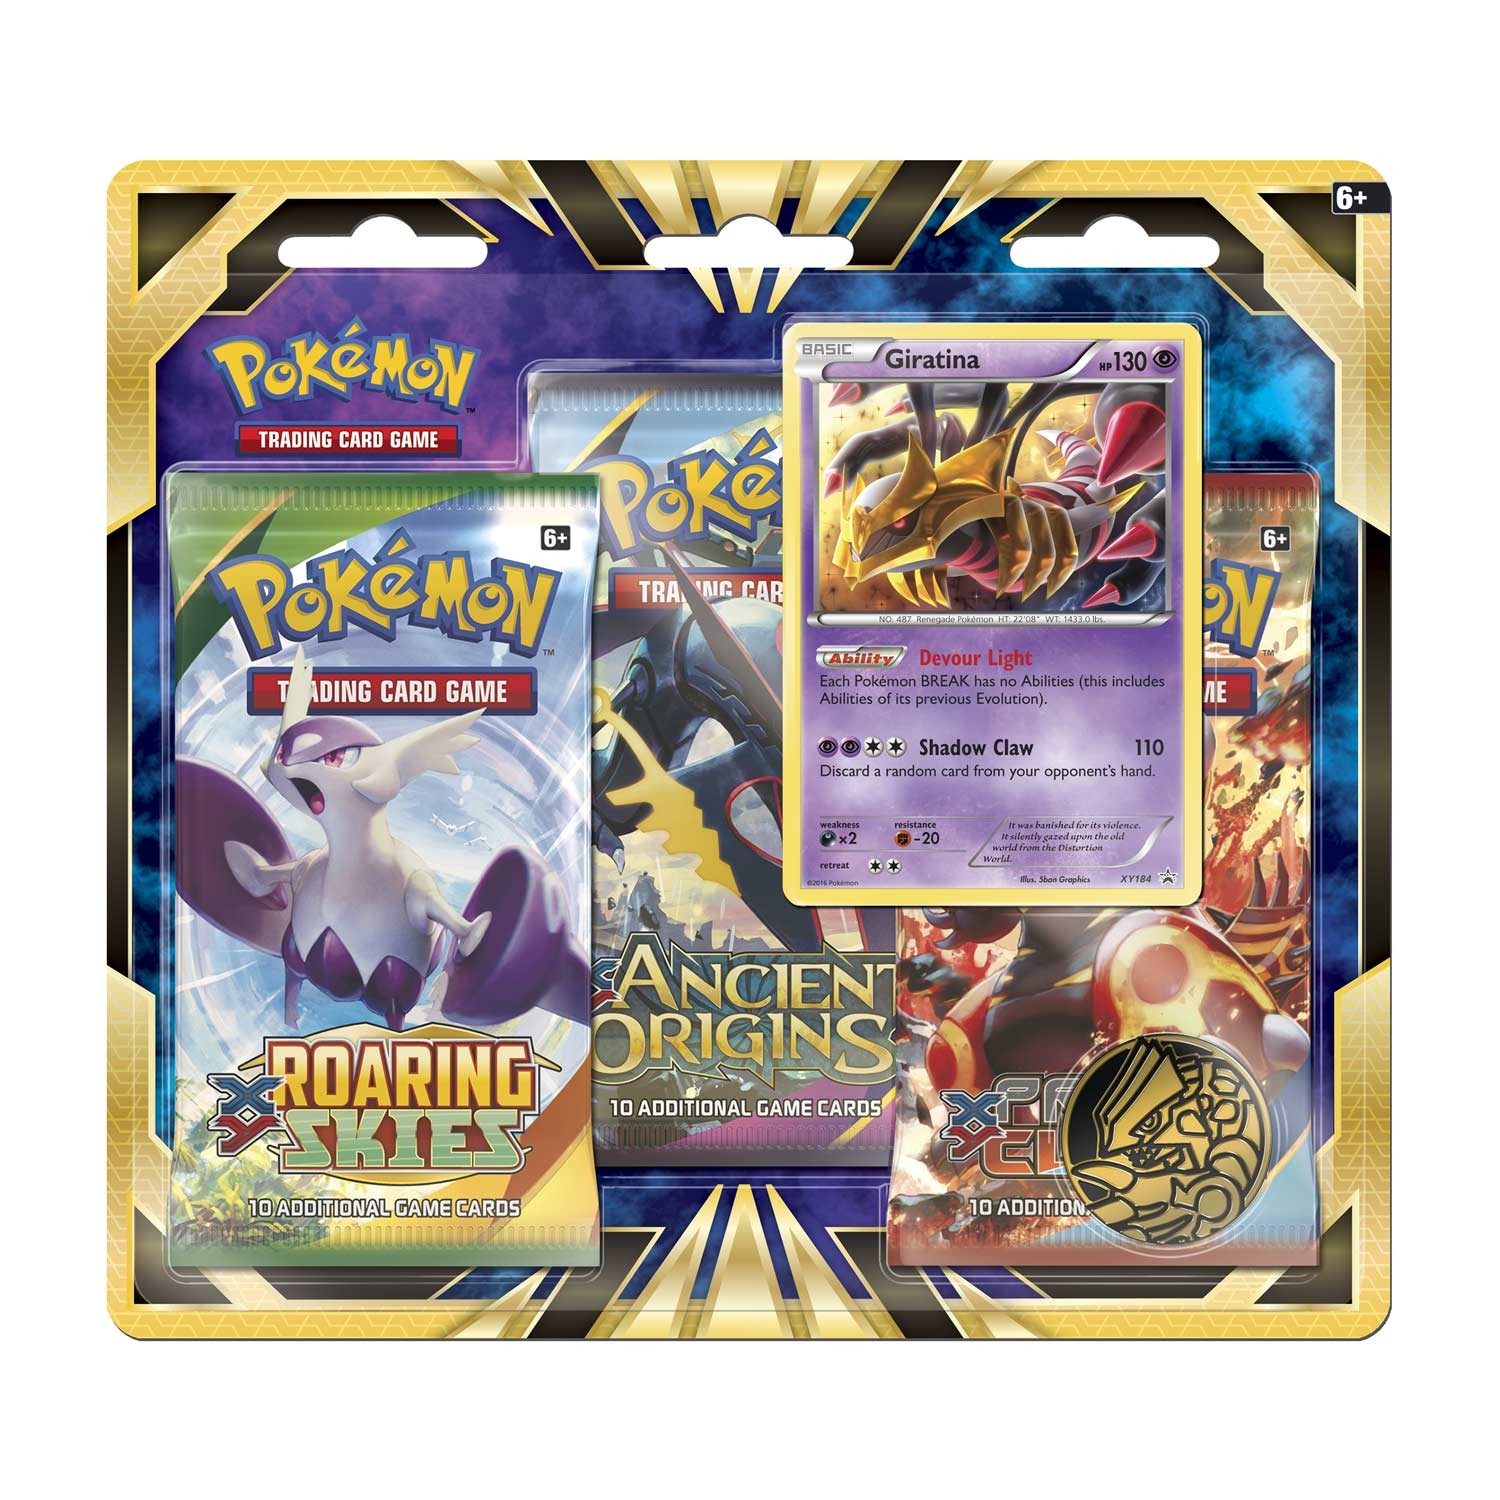 Pokémon TCG: 3 Booster Packs with Bonus Giratina Promo Card and Coin